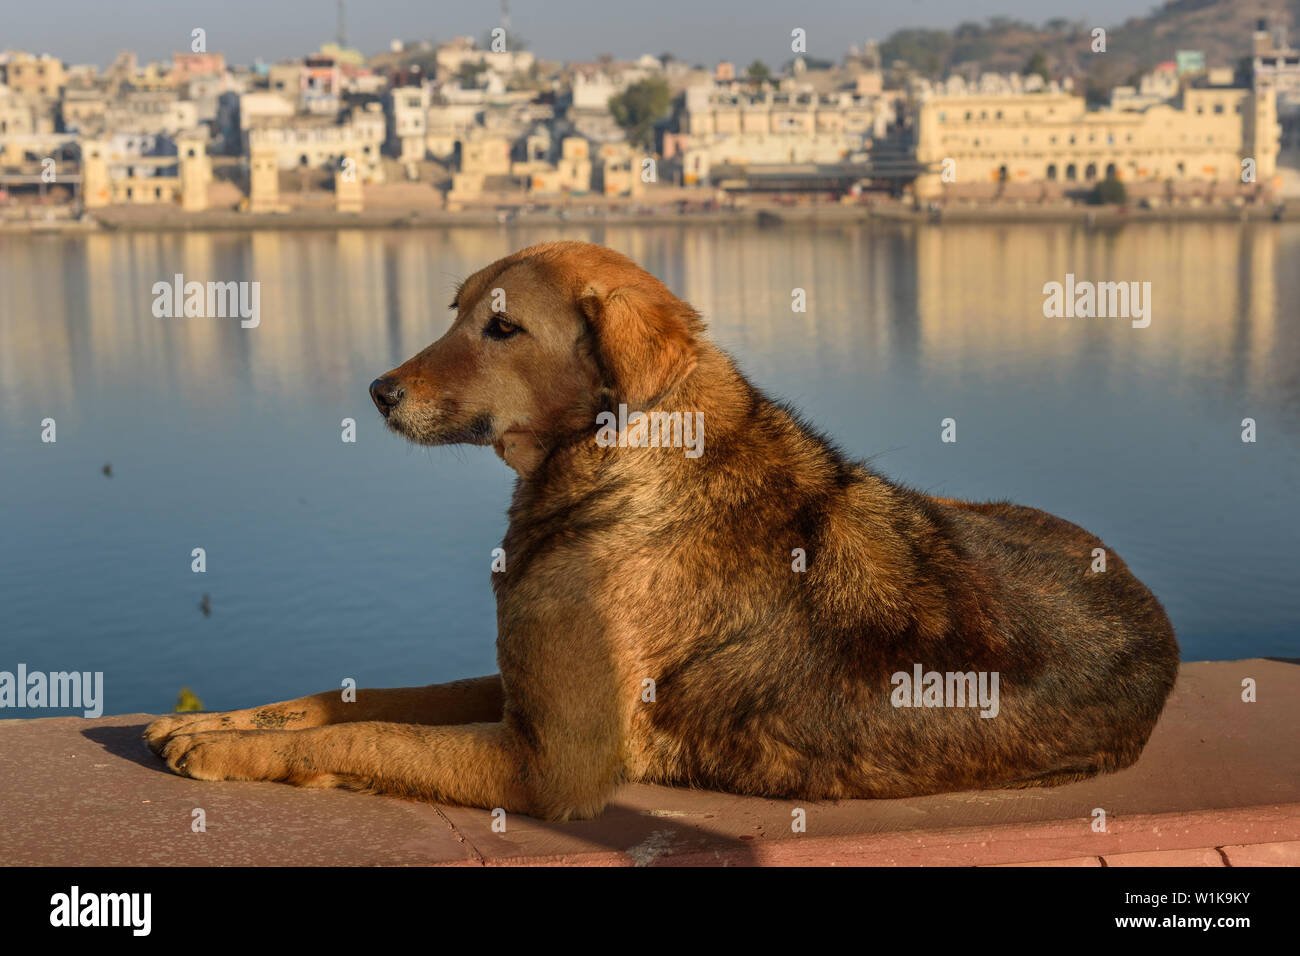 dog-at-pushkar-holy-lake-in-rajasthan-india-W1K9KY